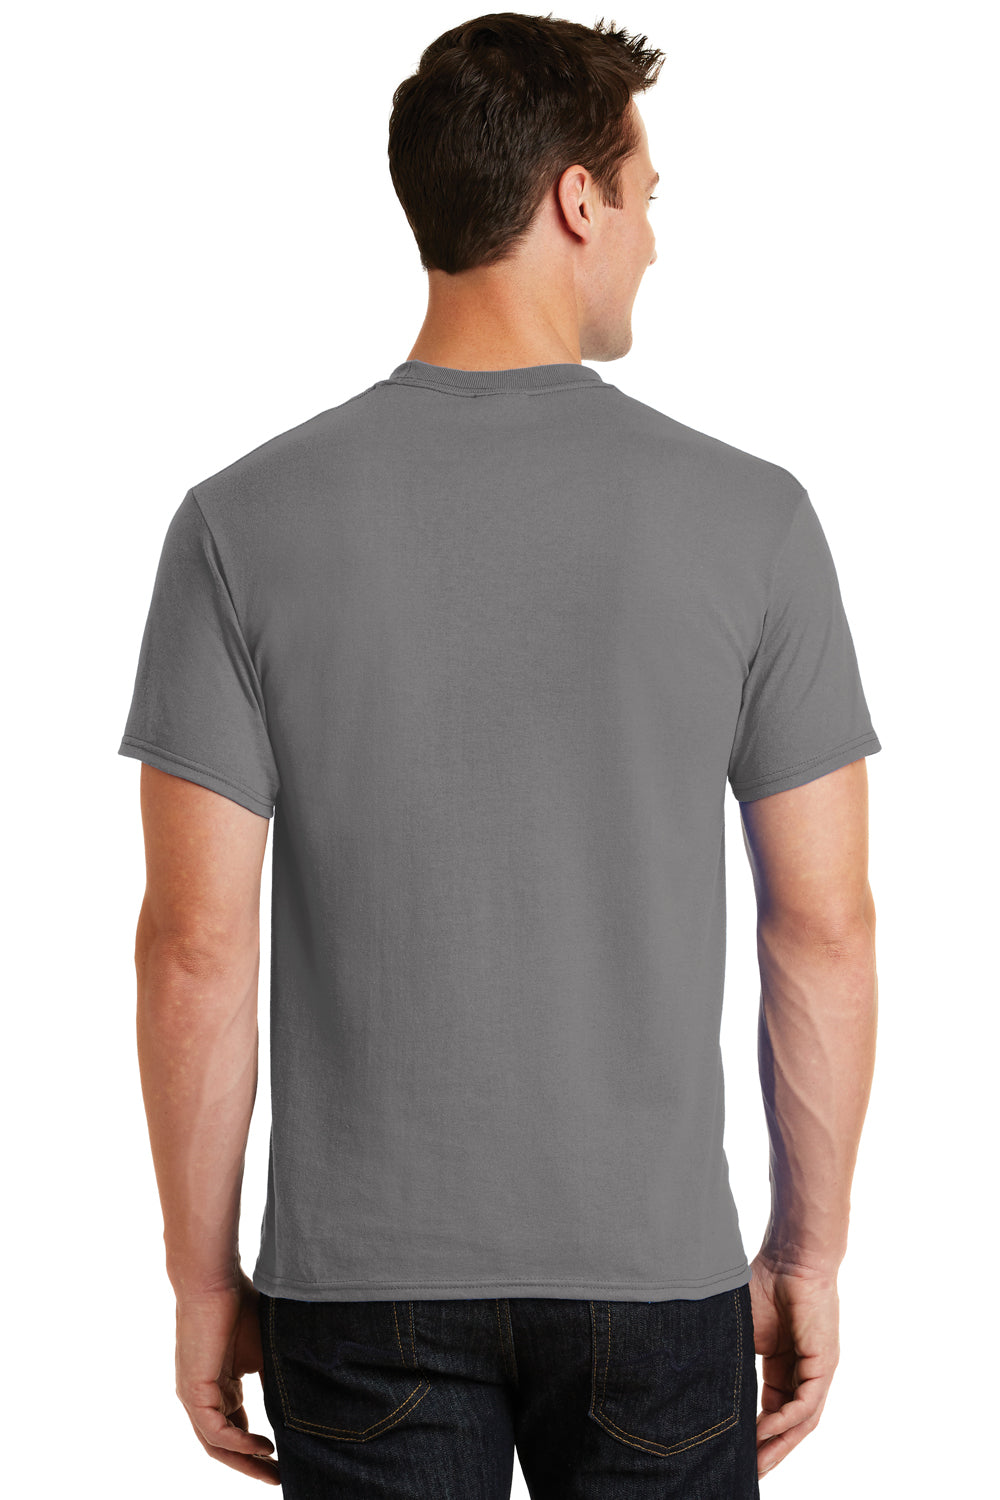 Port & Company PC55 Mens Core Short Sleeve Crewneck T-Shirt Medium Grey Back